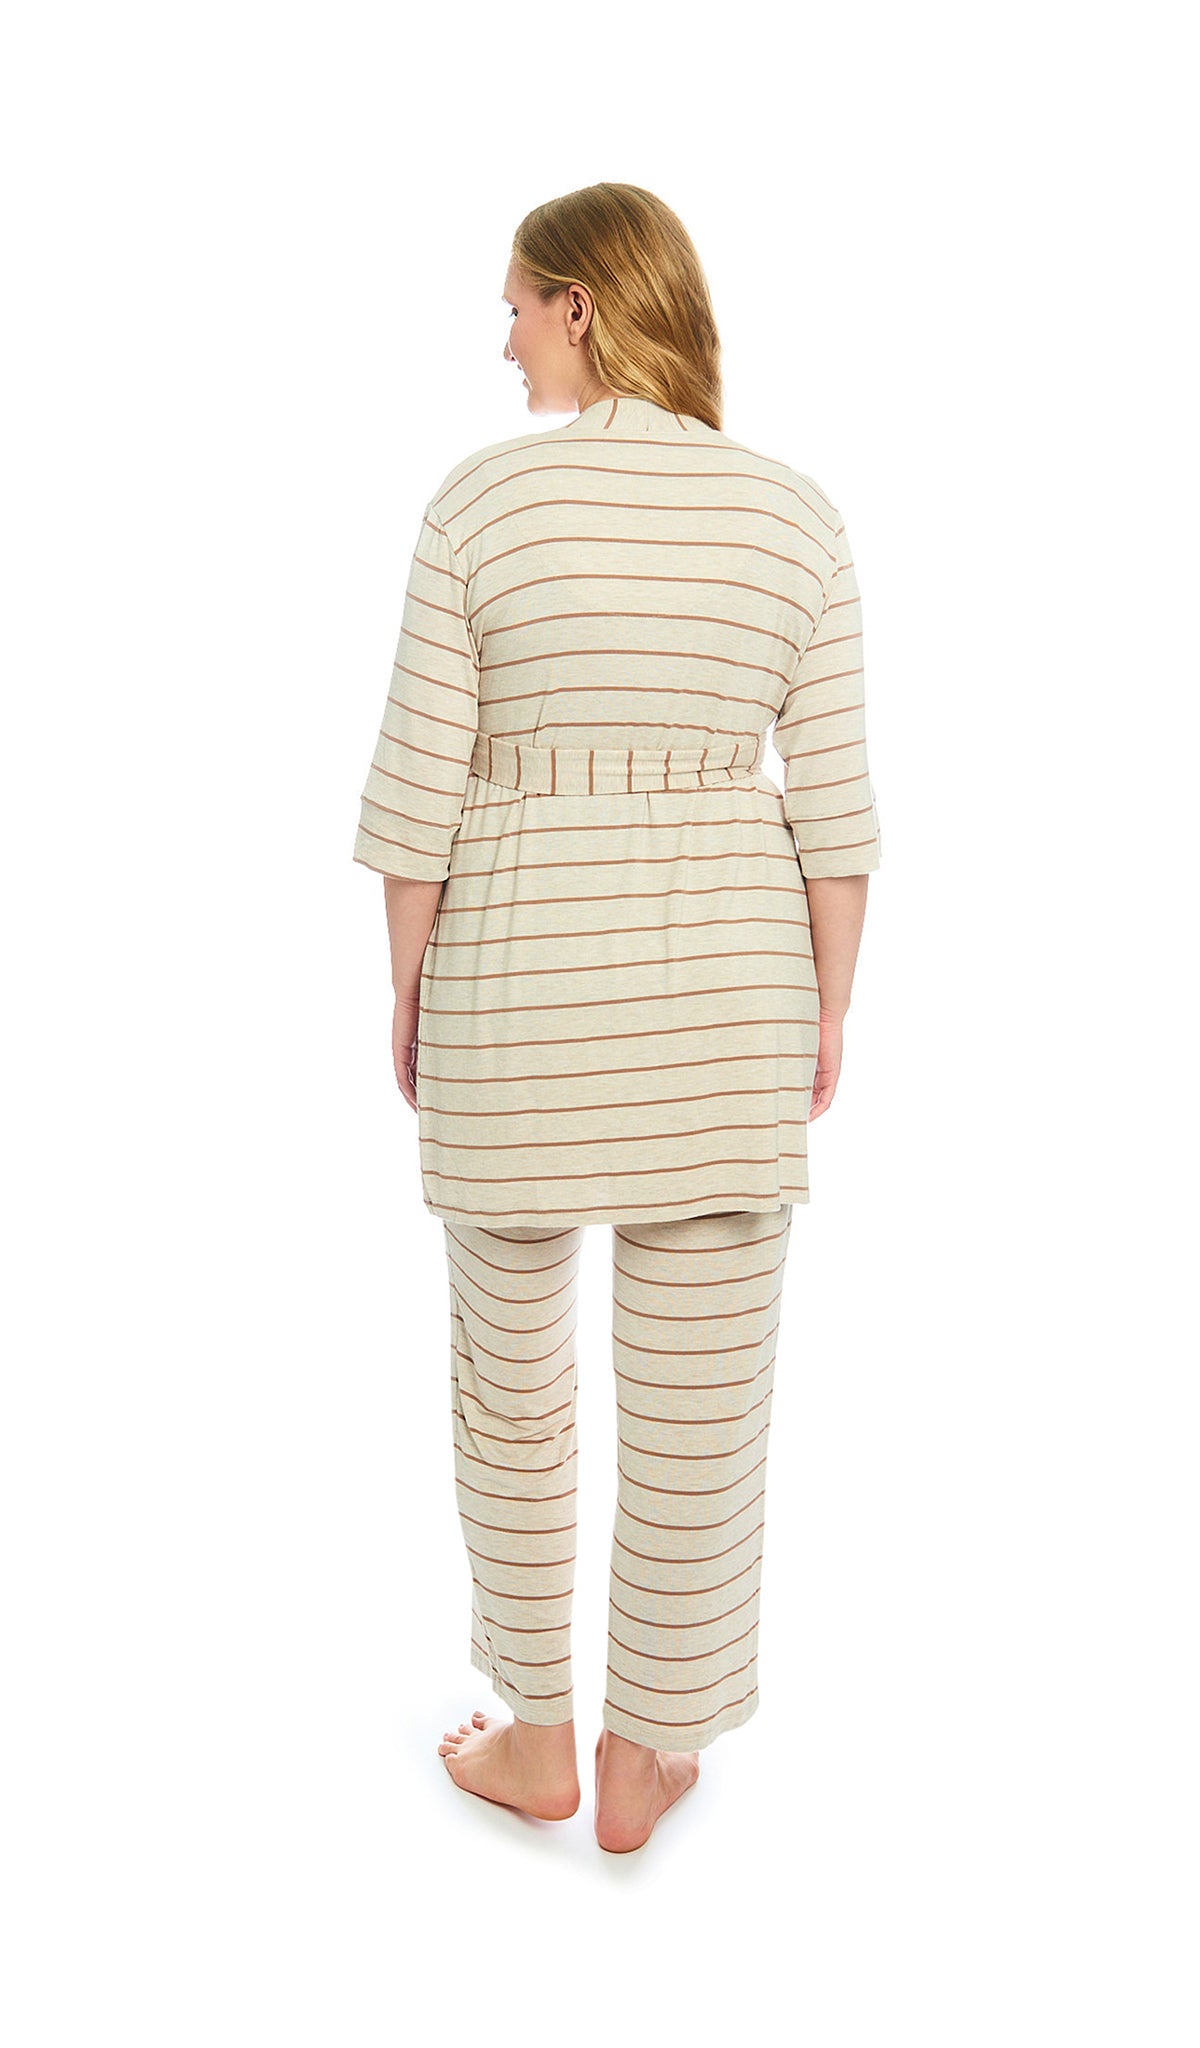 Mocha Stripe Analise 5-Piece Set, back shot of woman wearing robe and pant.